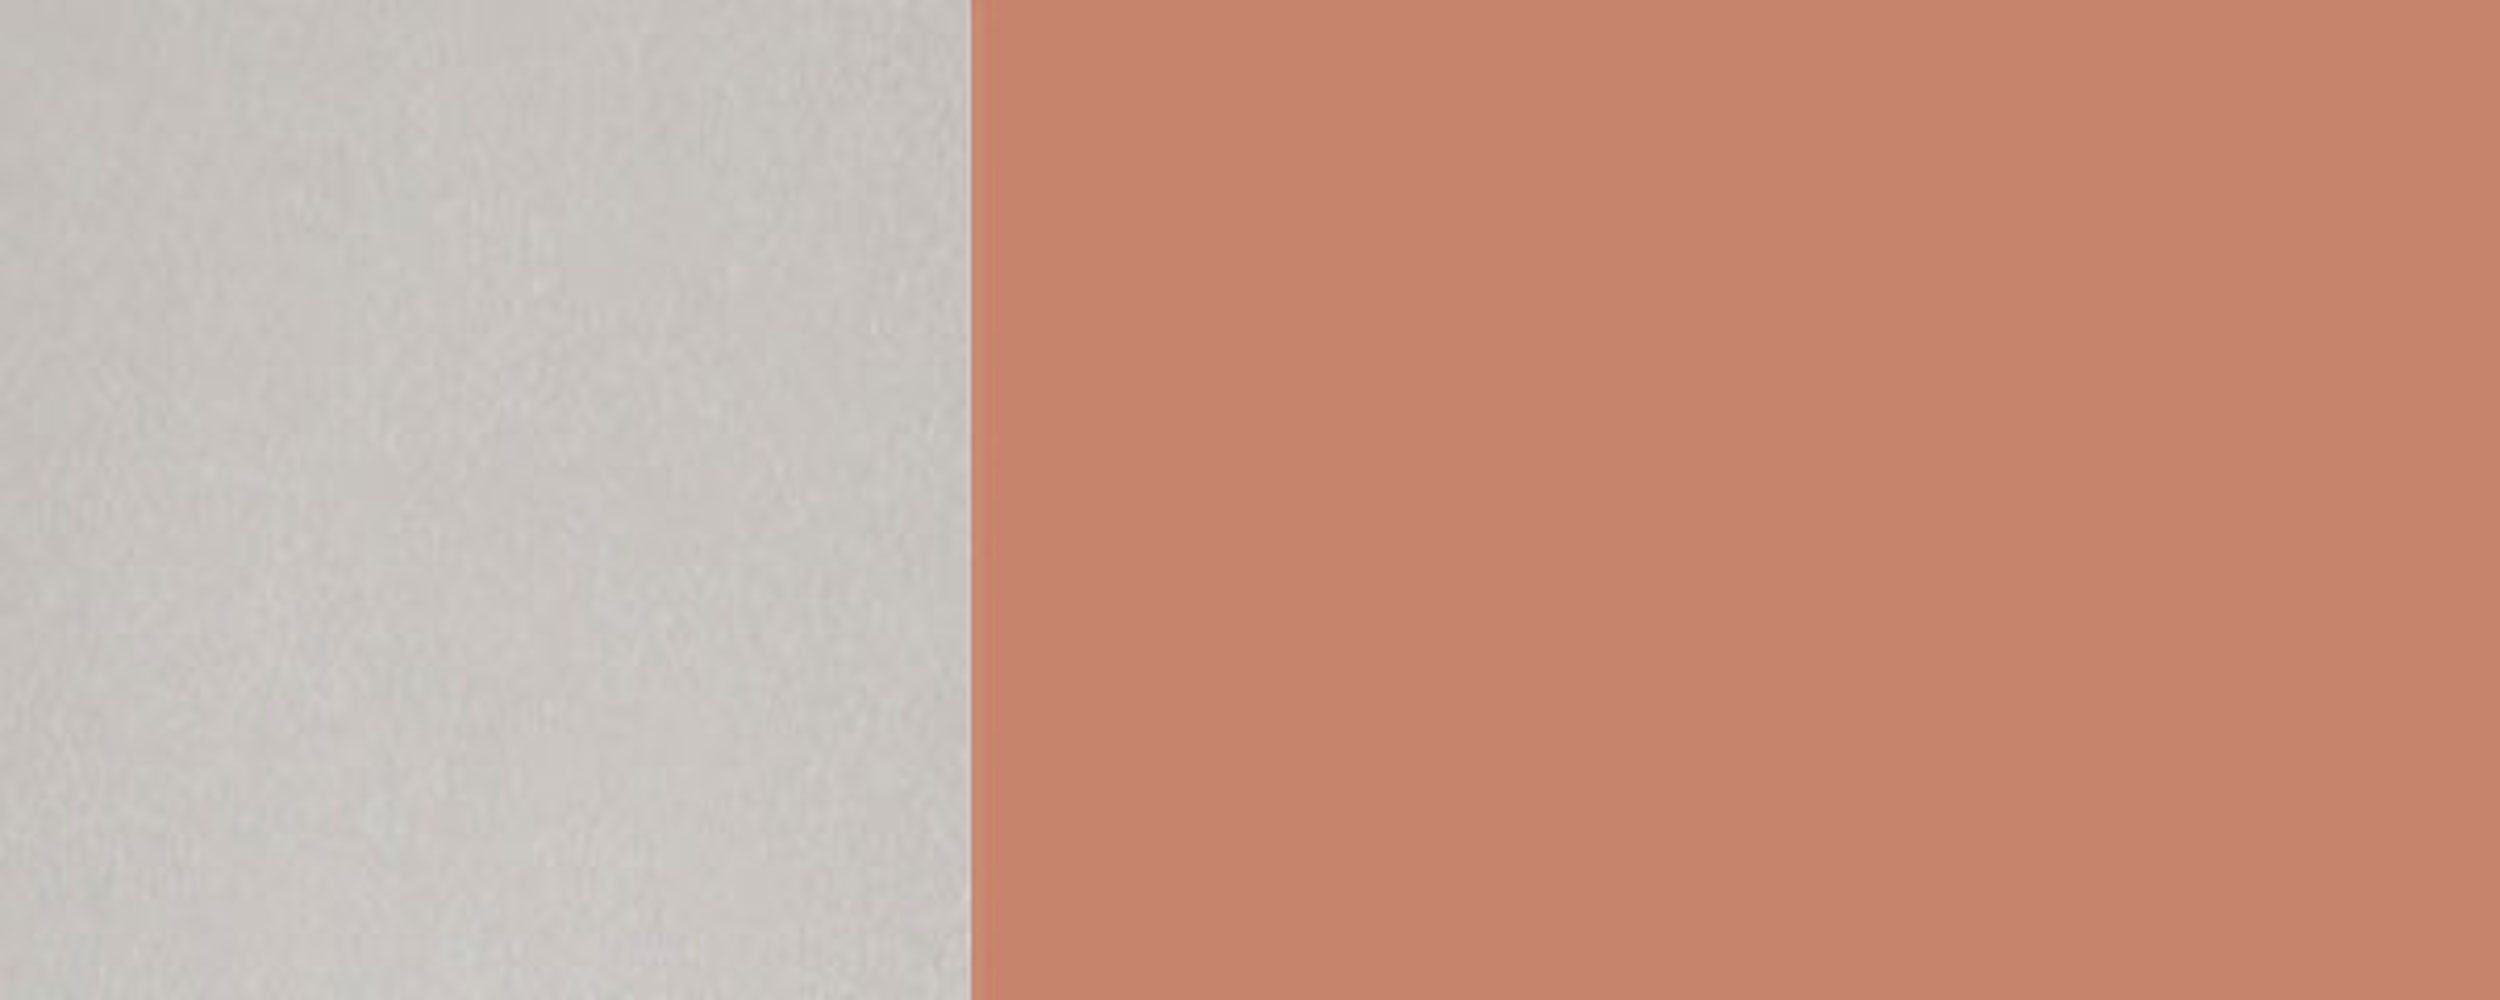 40cm (Tivoli) mit Korpusfarbe Klapphängeschrank Glasfront und Tivoli 3012 RAL matt wählbar Front- 1-türig beigerot Feldmann-Wohnen